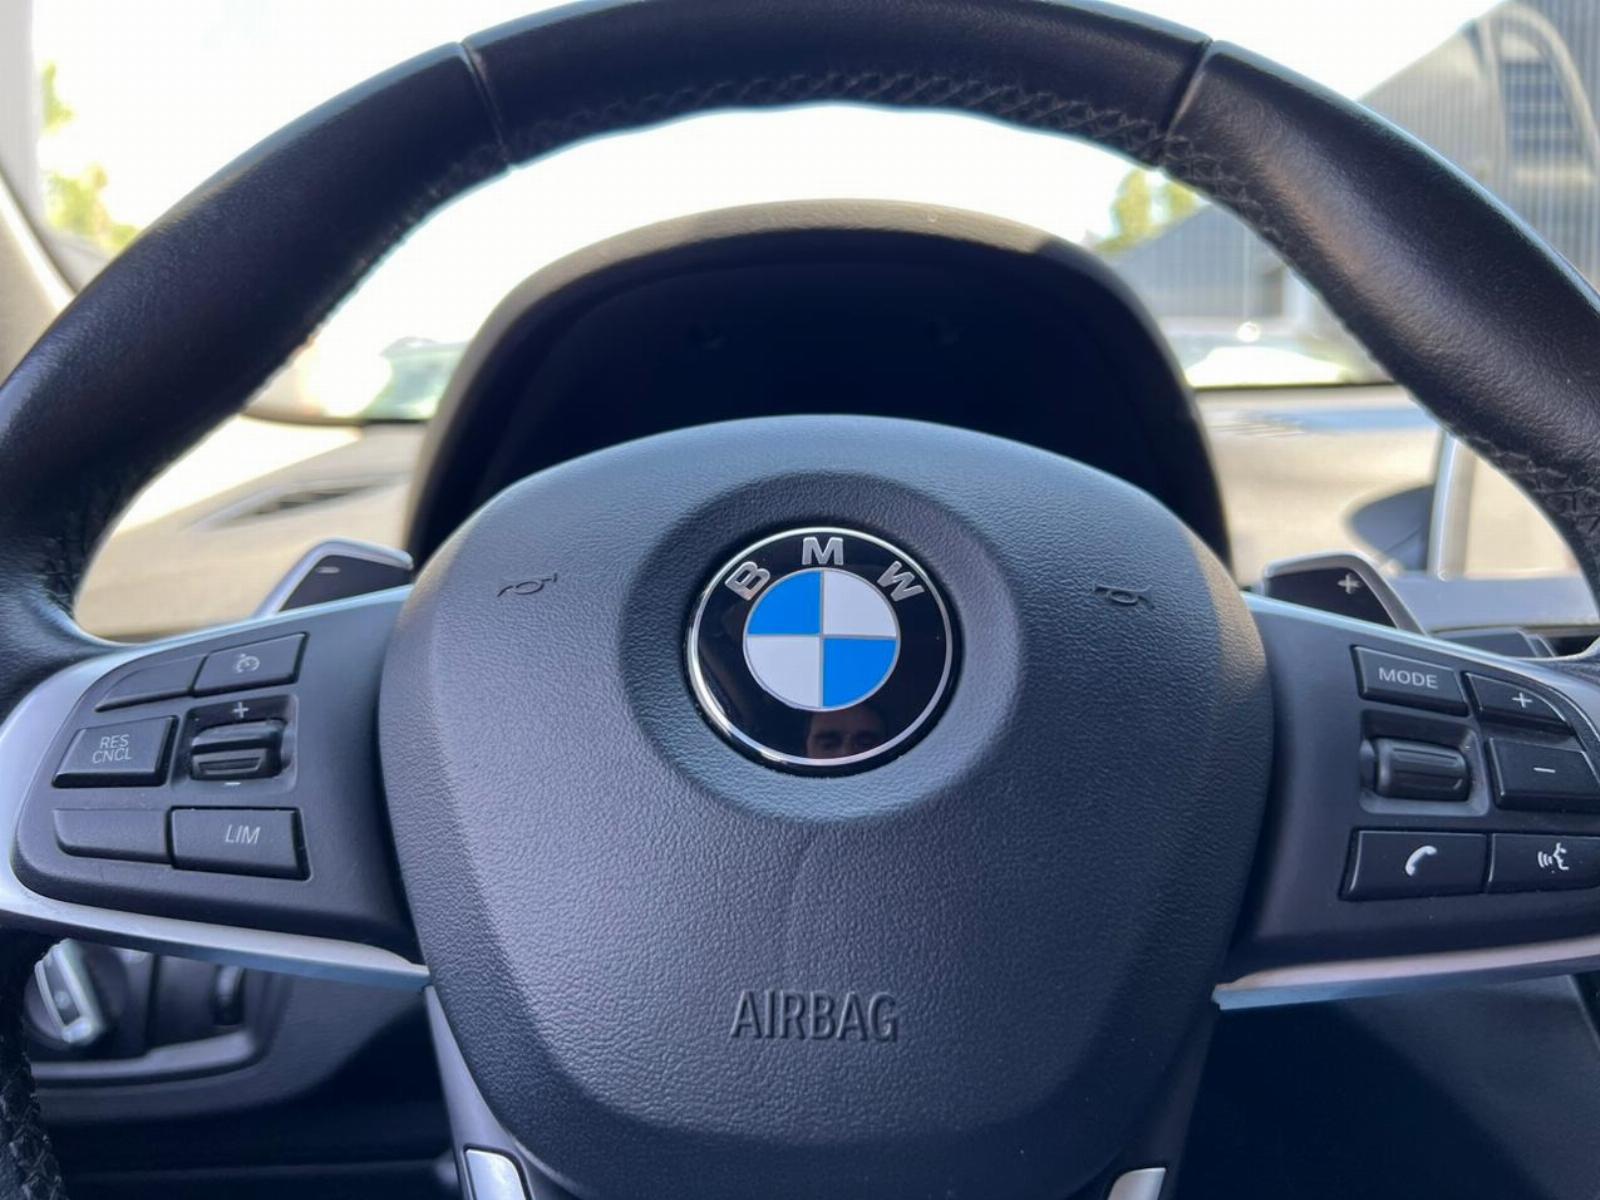 BMW X1 DIÉSEL SDRIVE 18D 2019 MANTENIMIENTO AL DÍA UN DUEÑO - FULL MOTOR